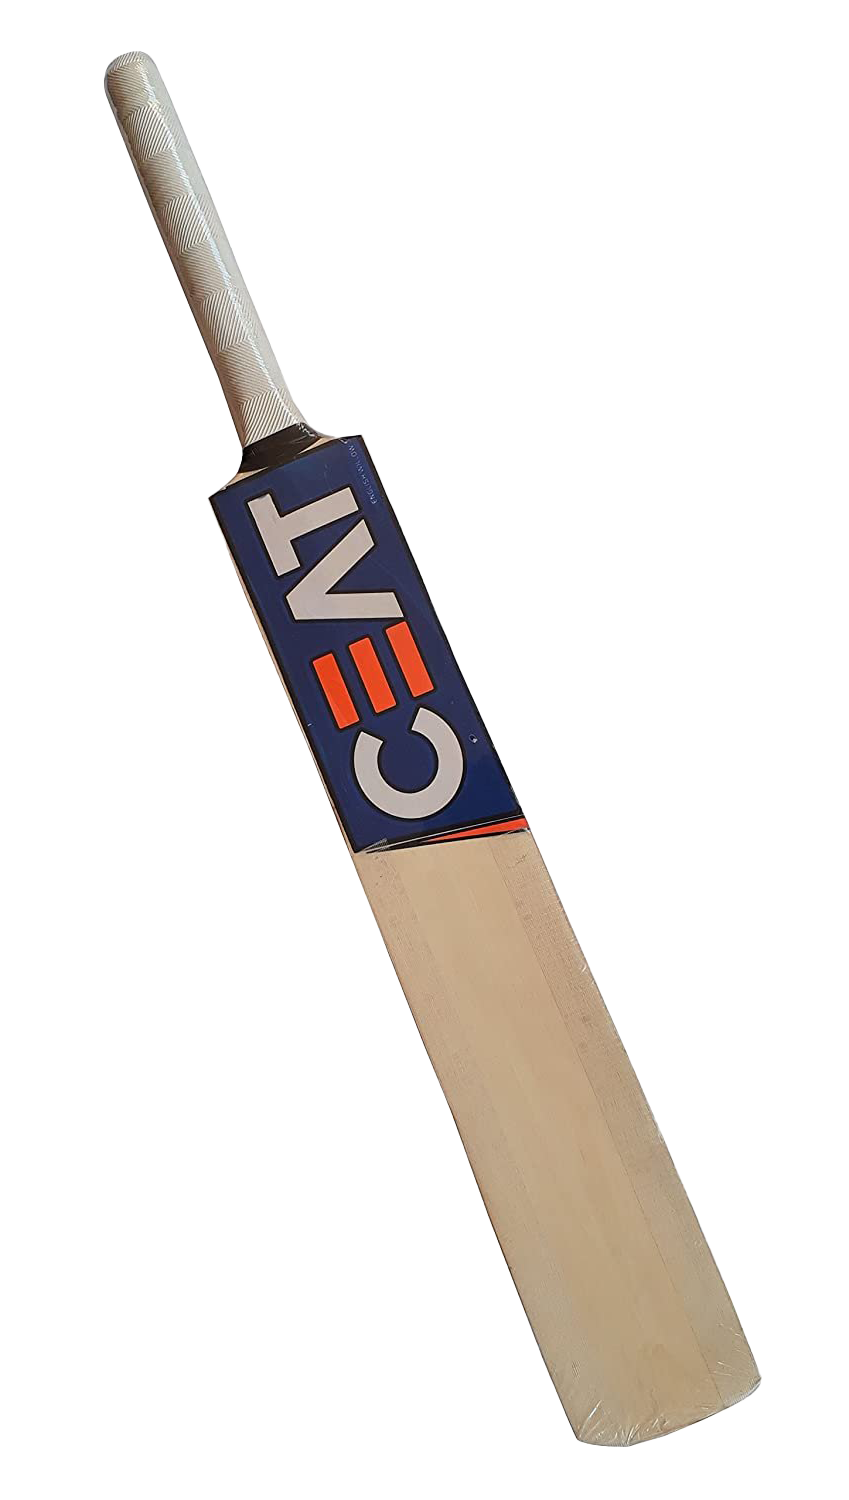 Cricket Bat PNG Image